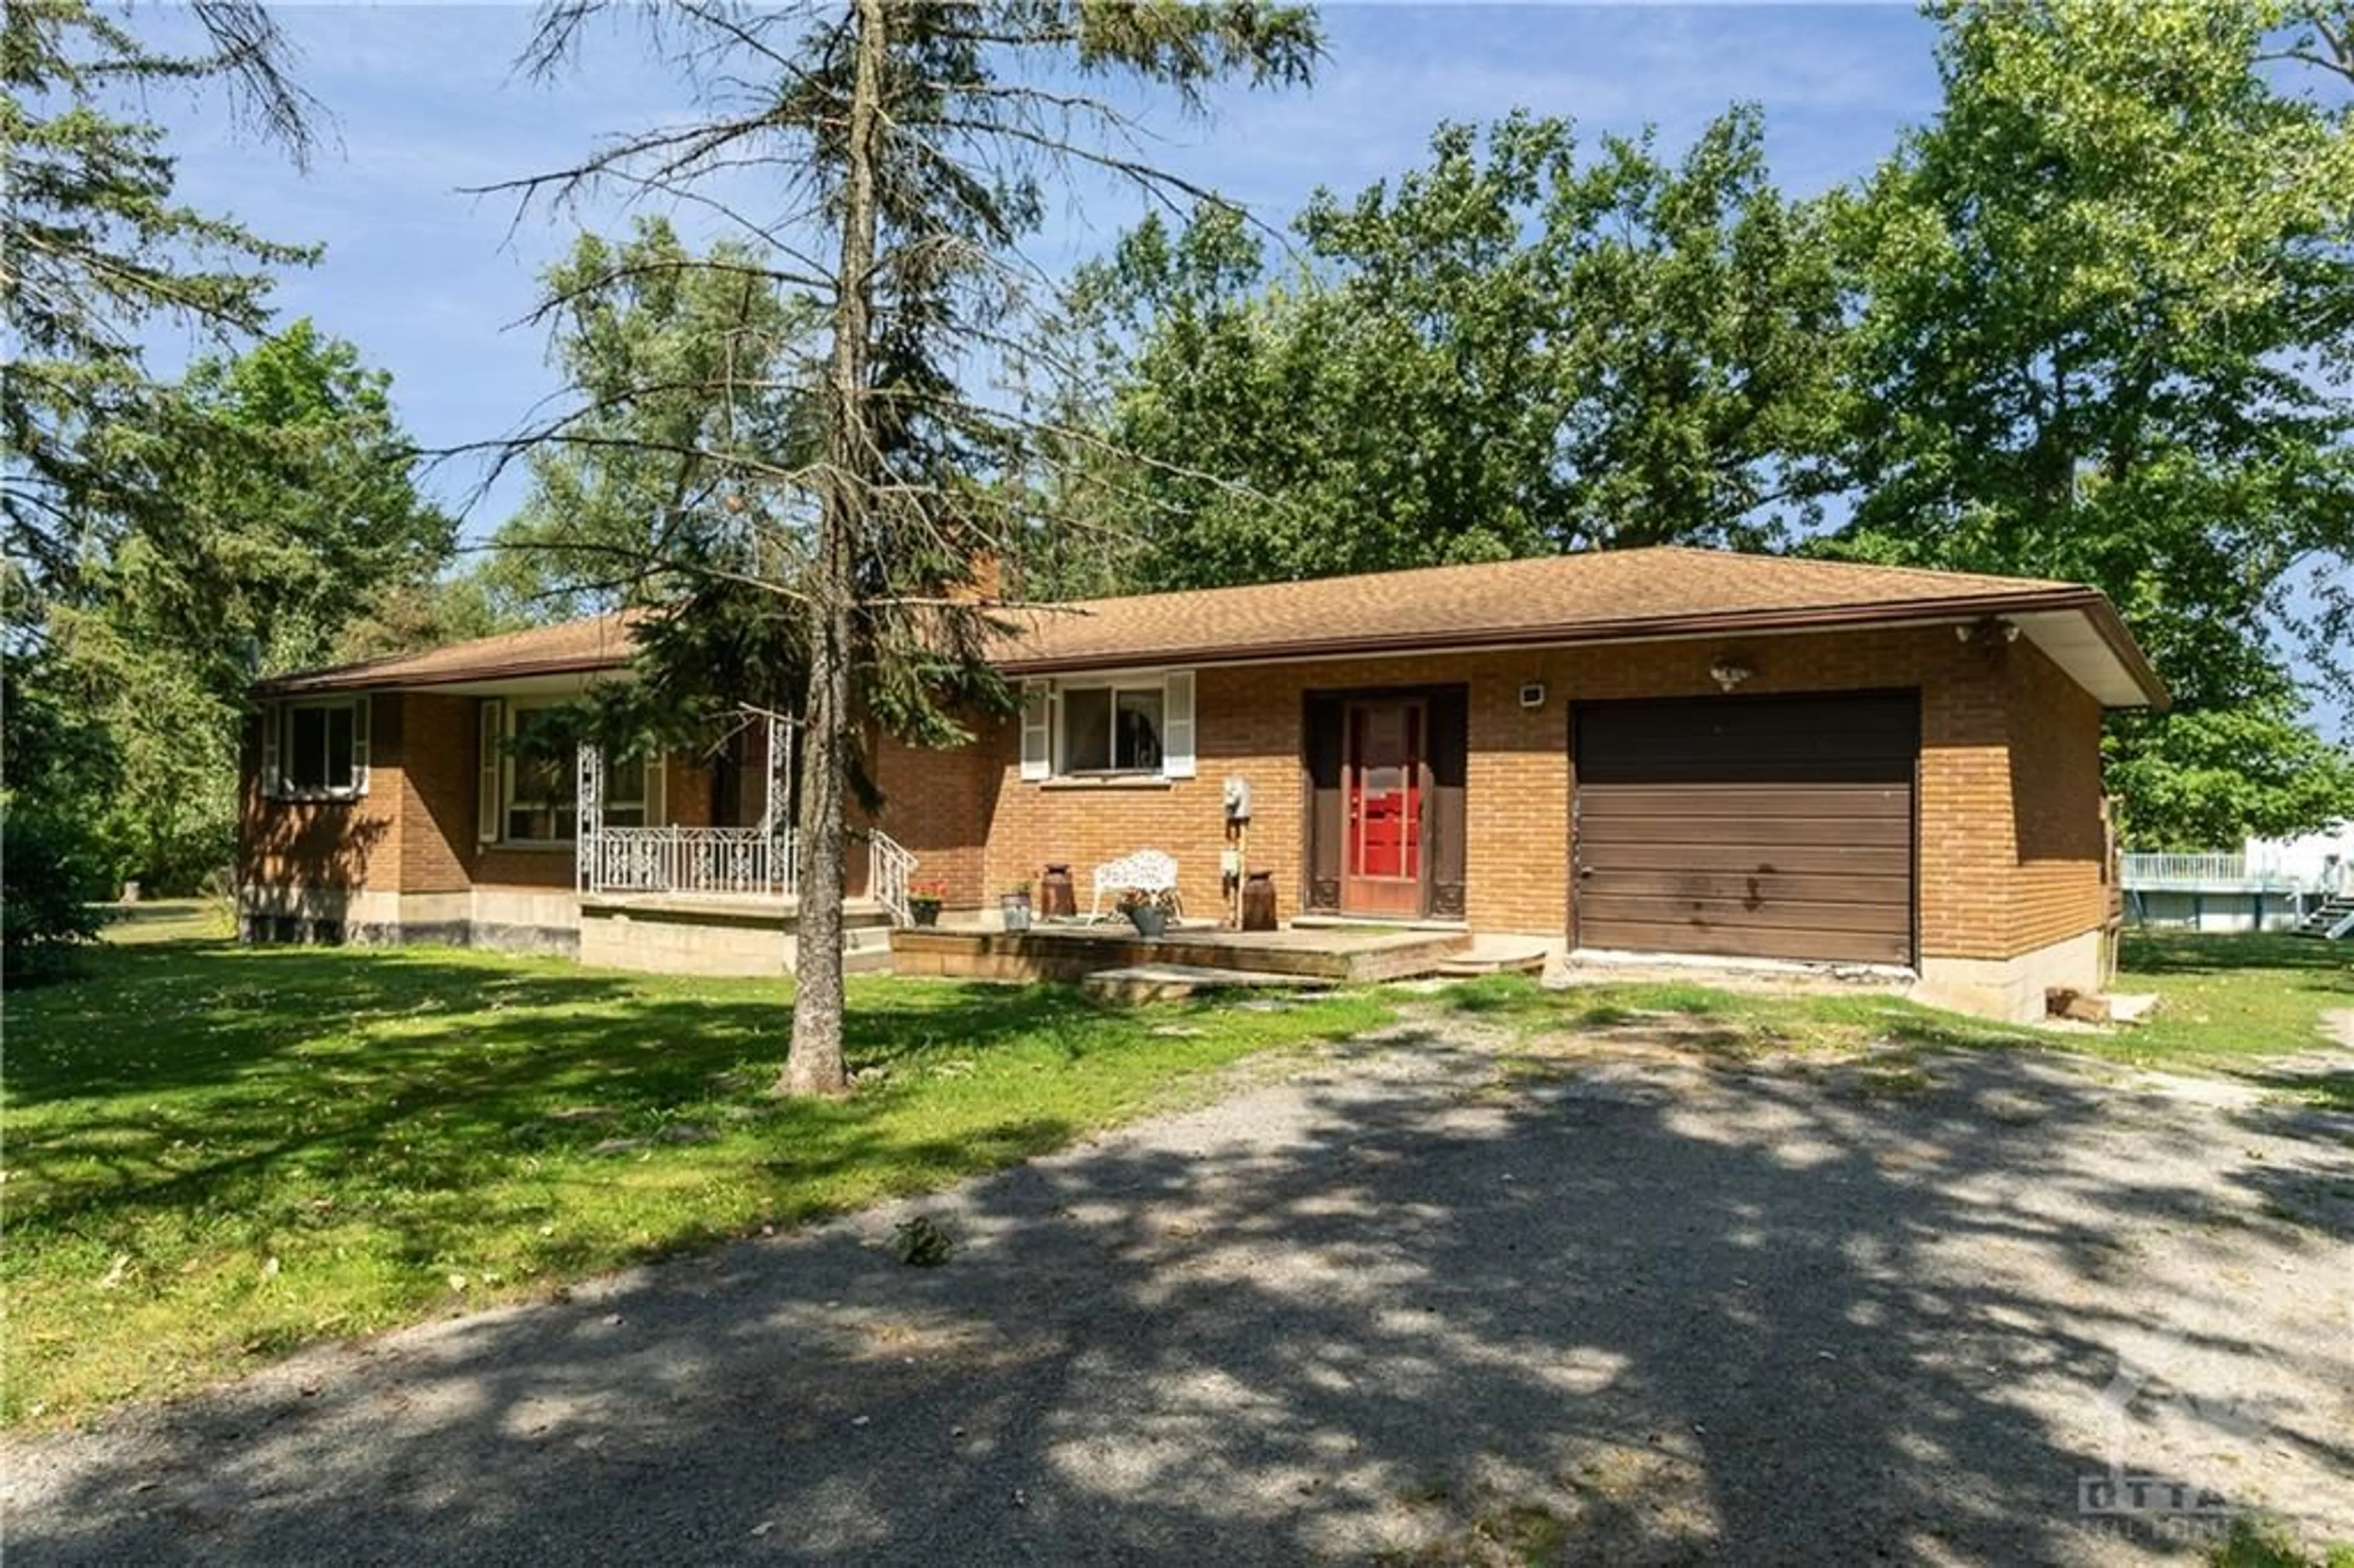 Home with brick exterior material for 5801 BOSSERT Rd, Niagara Falls Ontario L2H 2H7